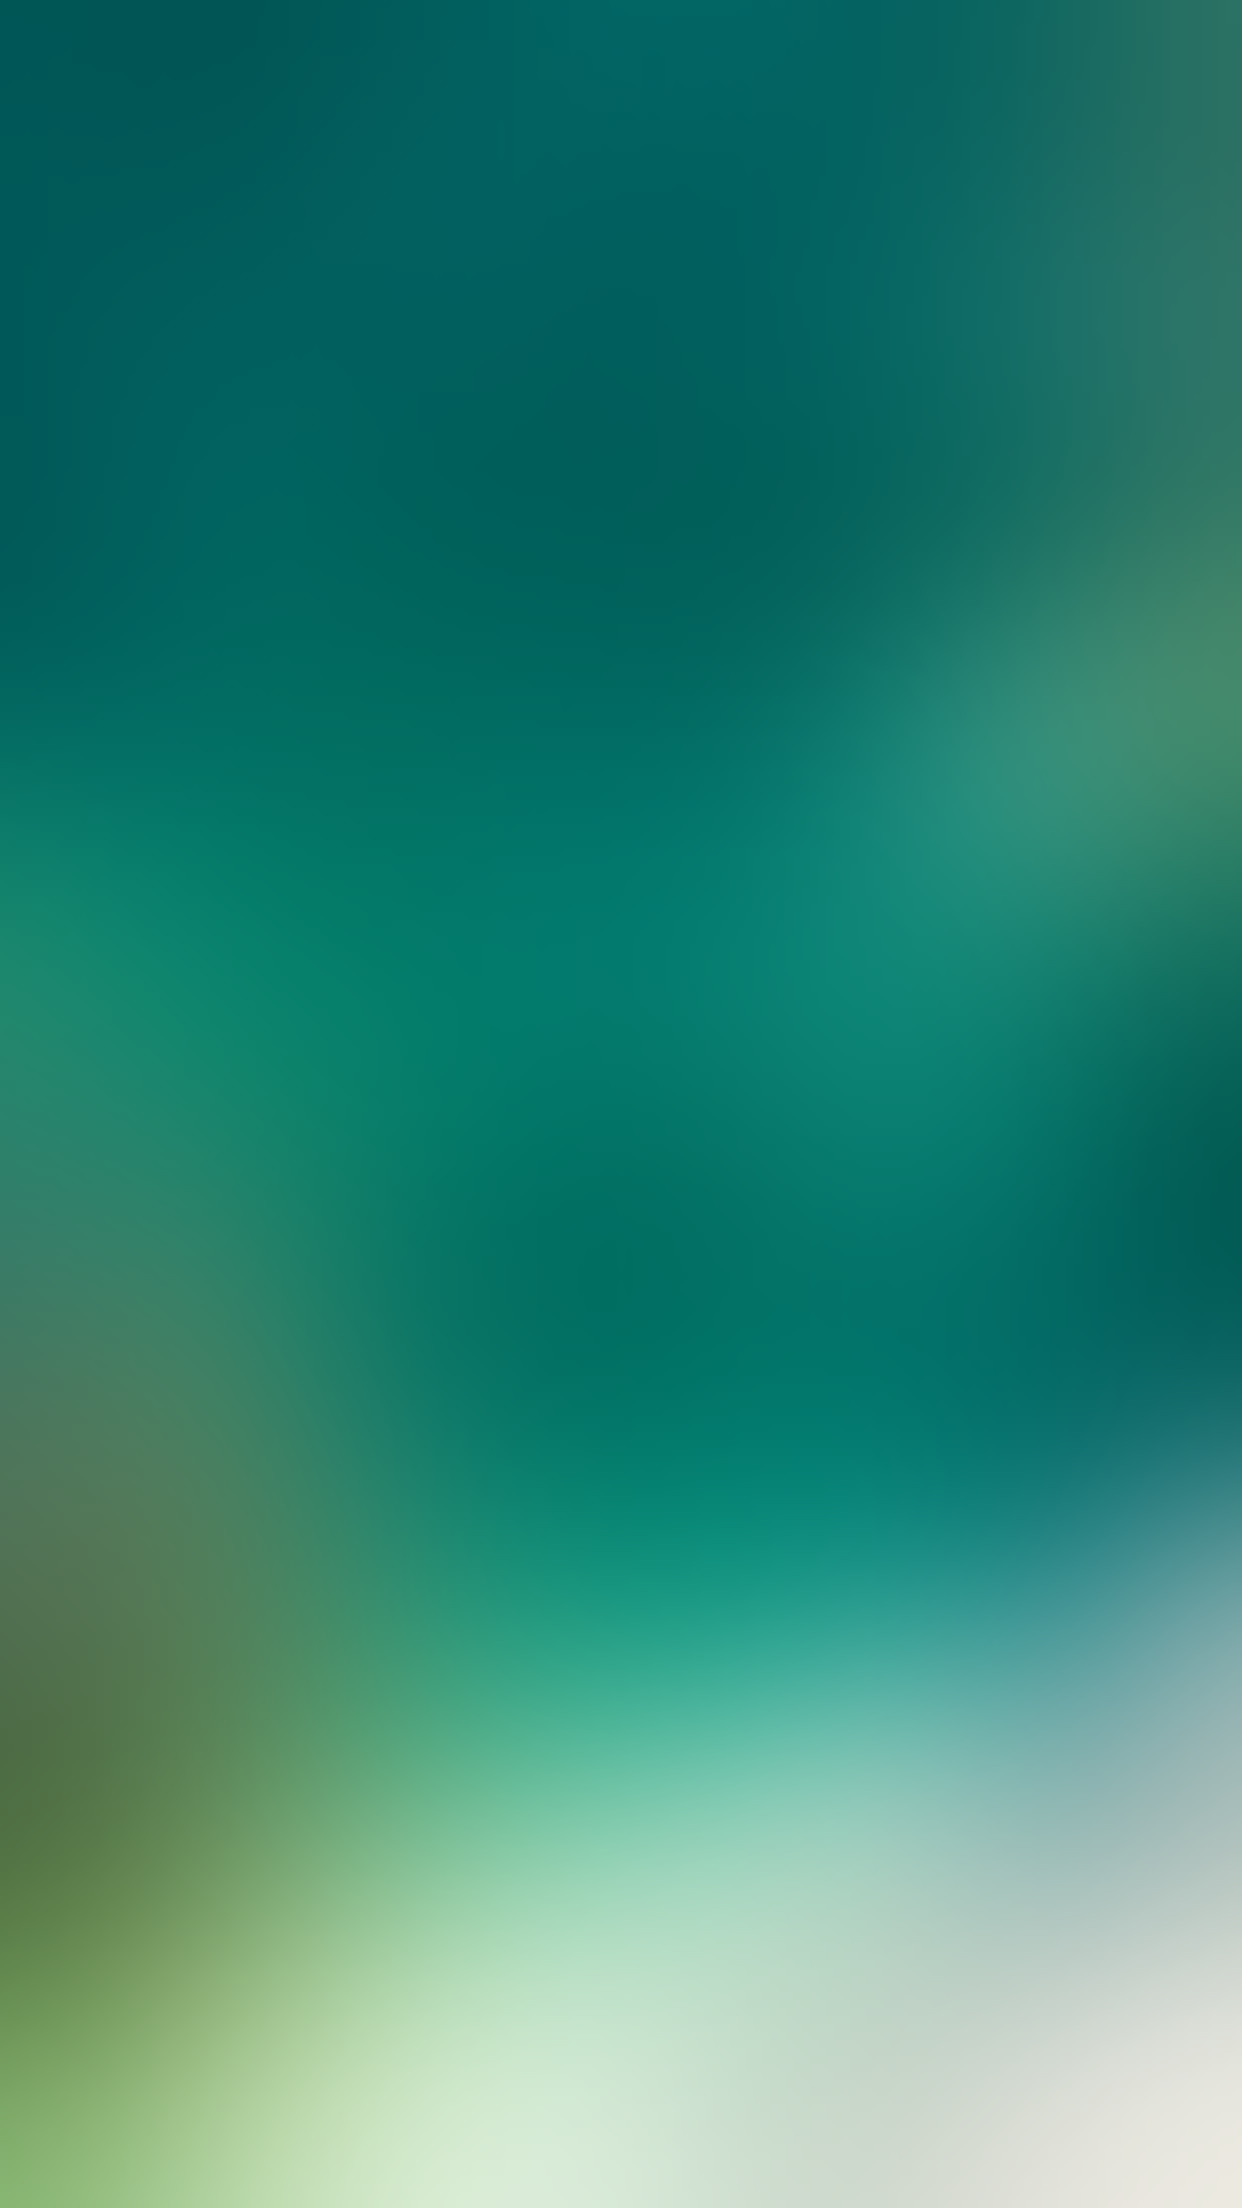 ios 10 fondo de pantalla,verde,azul,agua,turquesa,tiempo de día